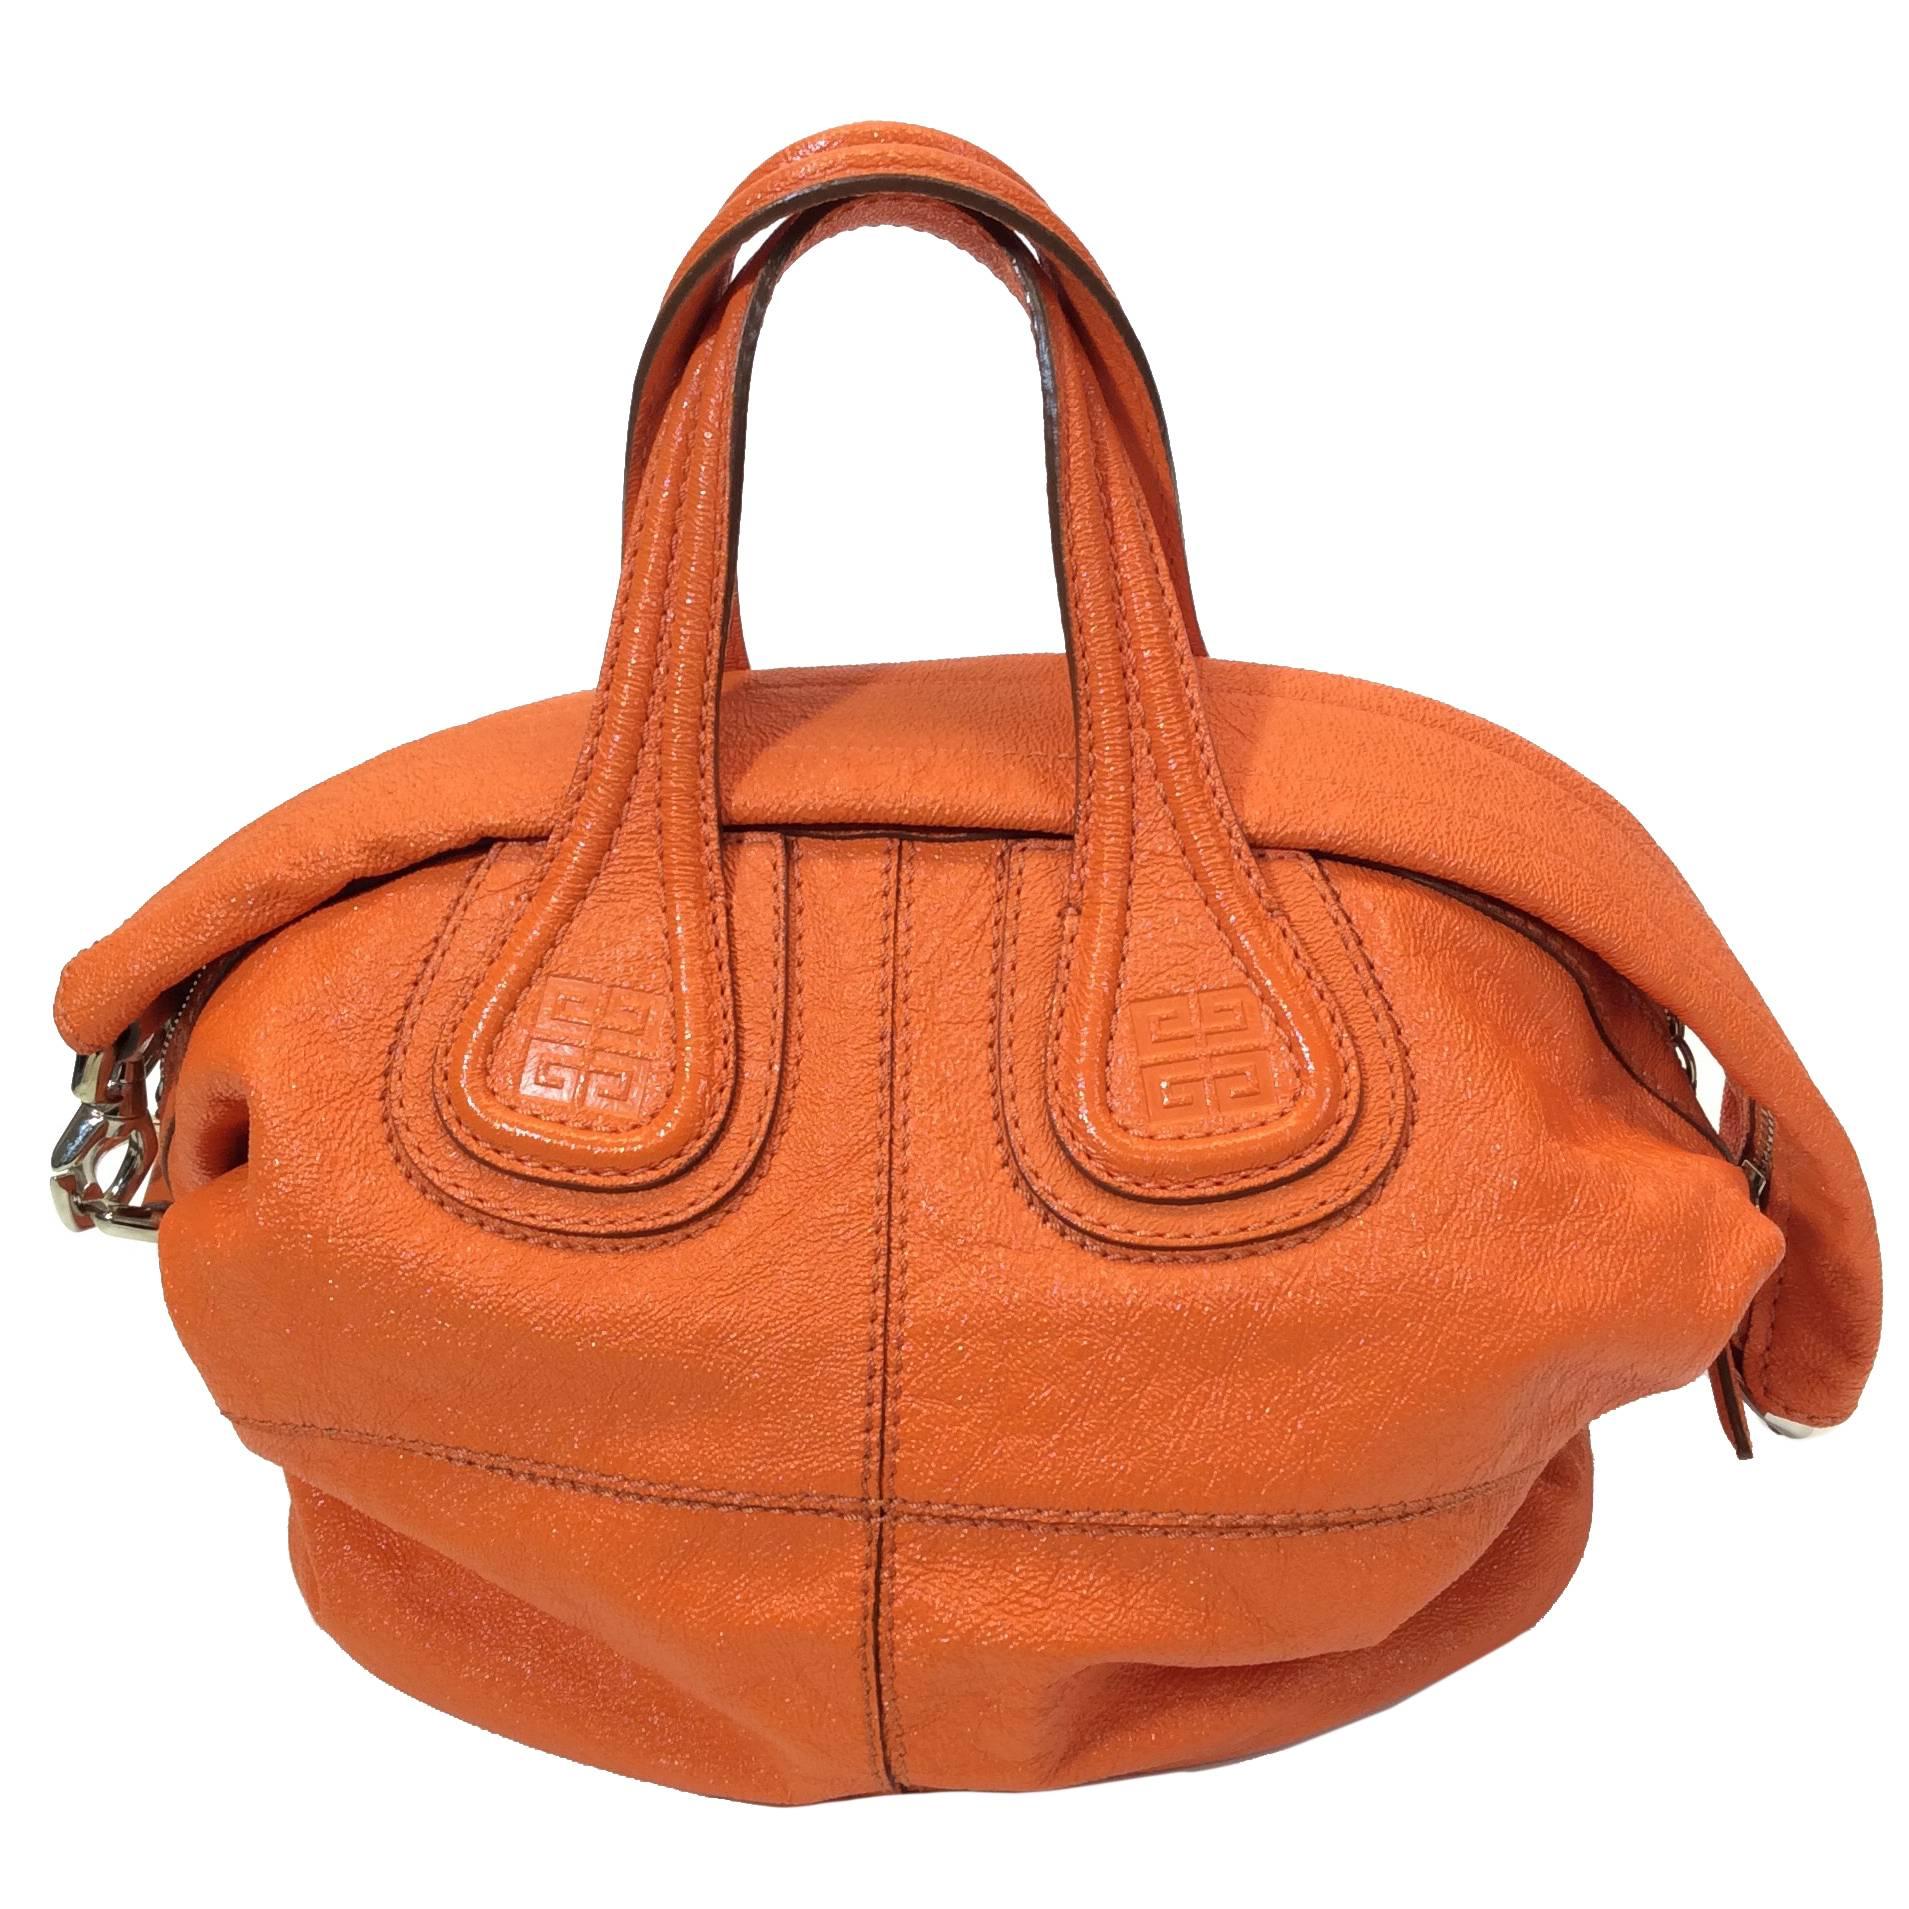 Givenchy Orange Leather Hobo Bag For Sale